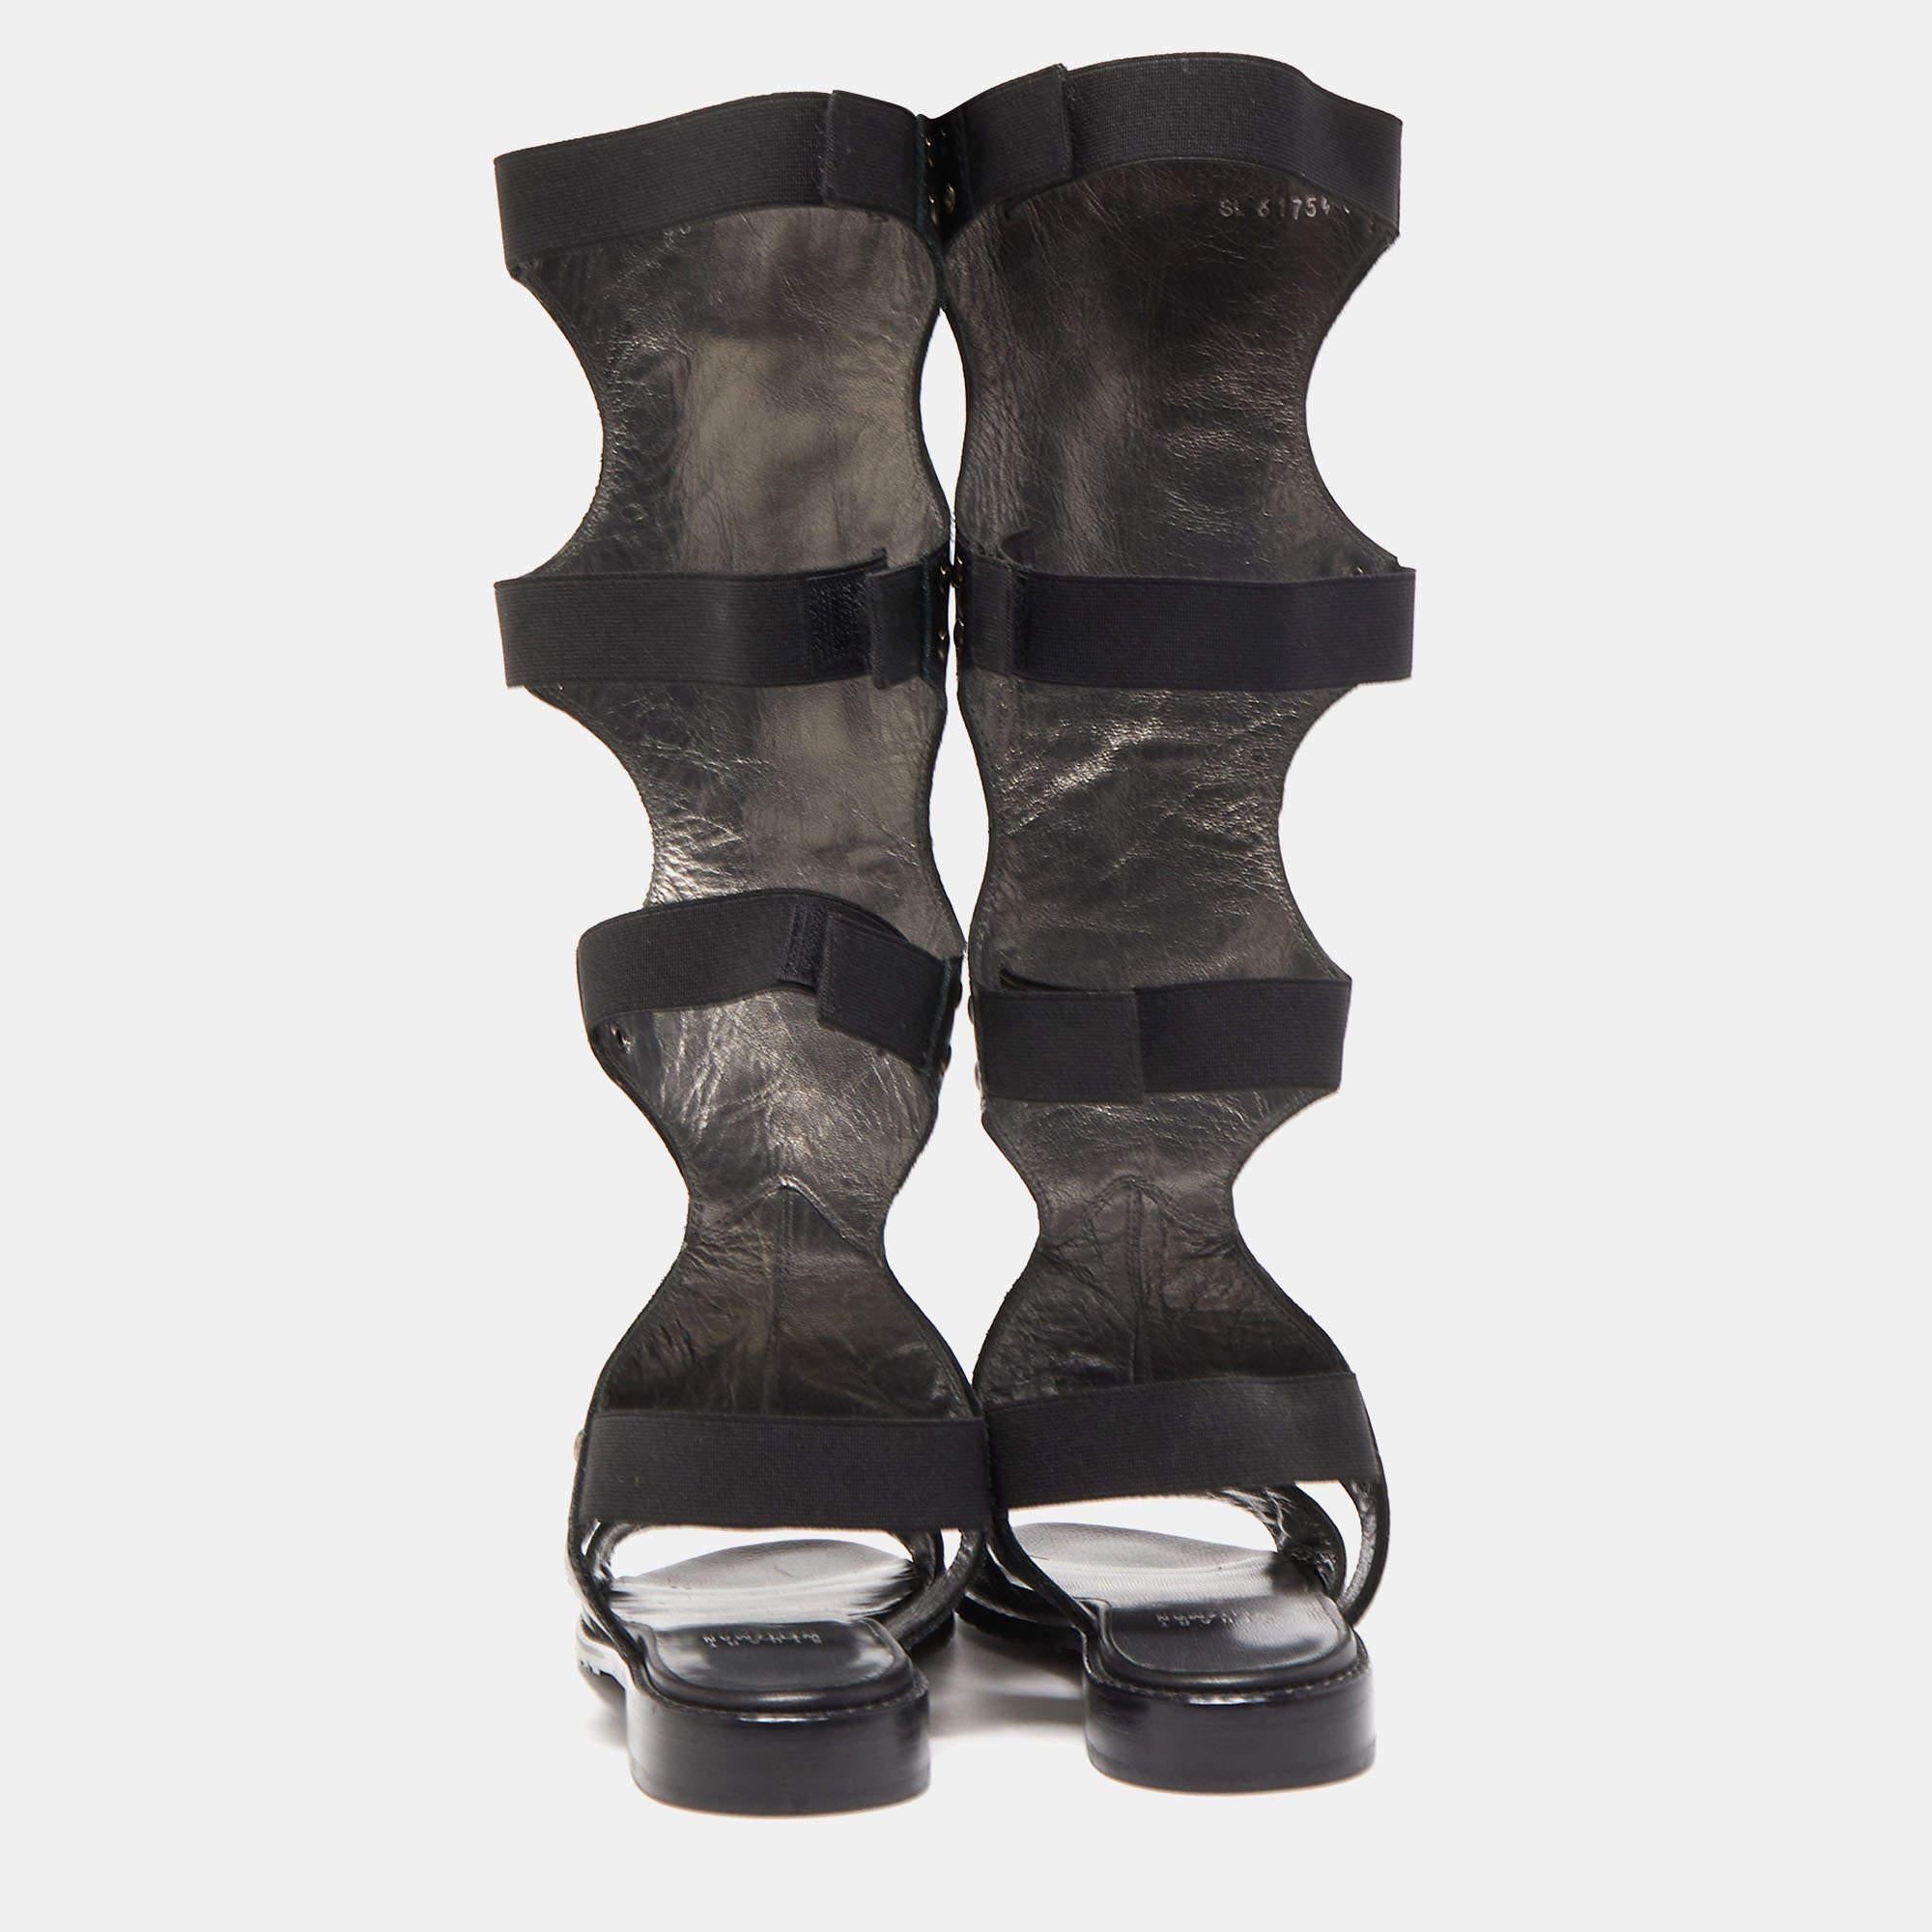 Stuart Weitzman Black Leather Gladiator Backview Sandals Size 35 In New Condition For Sale In Dubai, Al Qouz 2